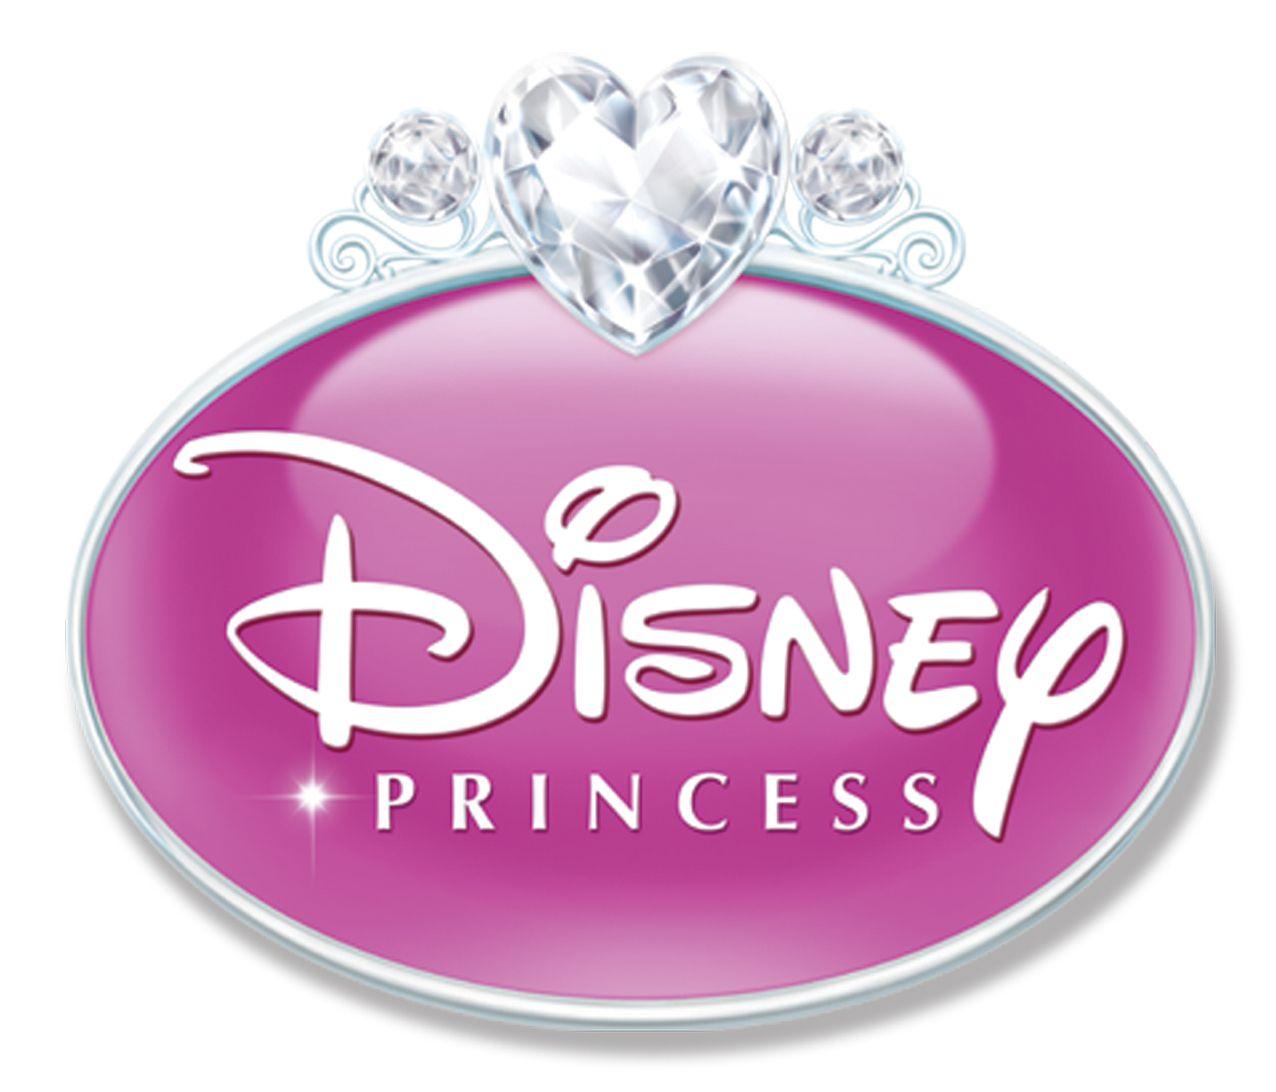 Princess Logo - Disney princess Logos